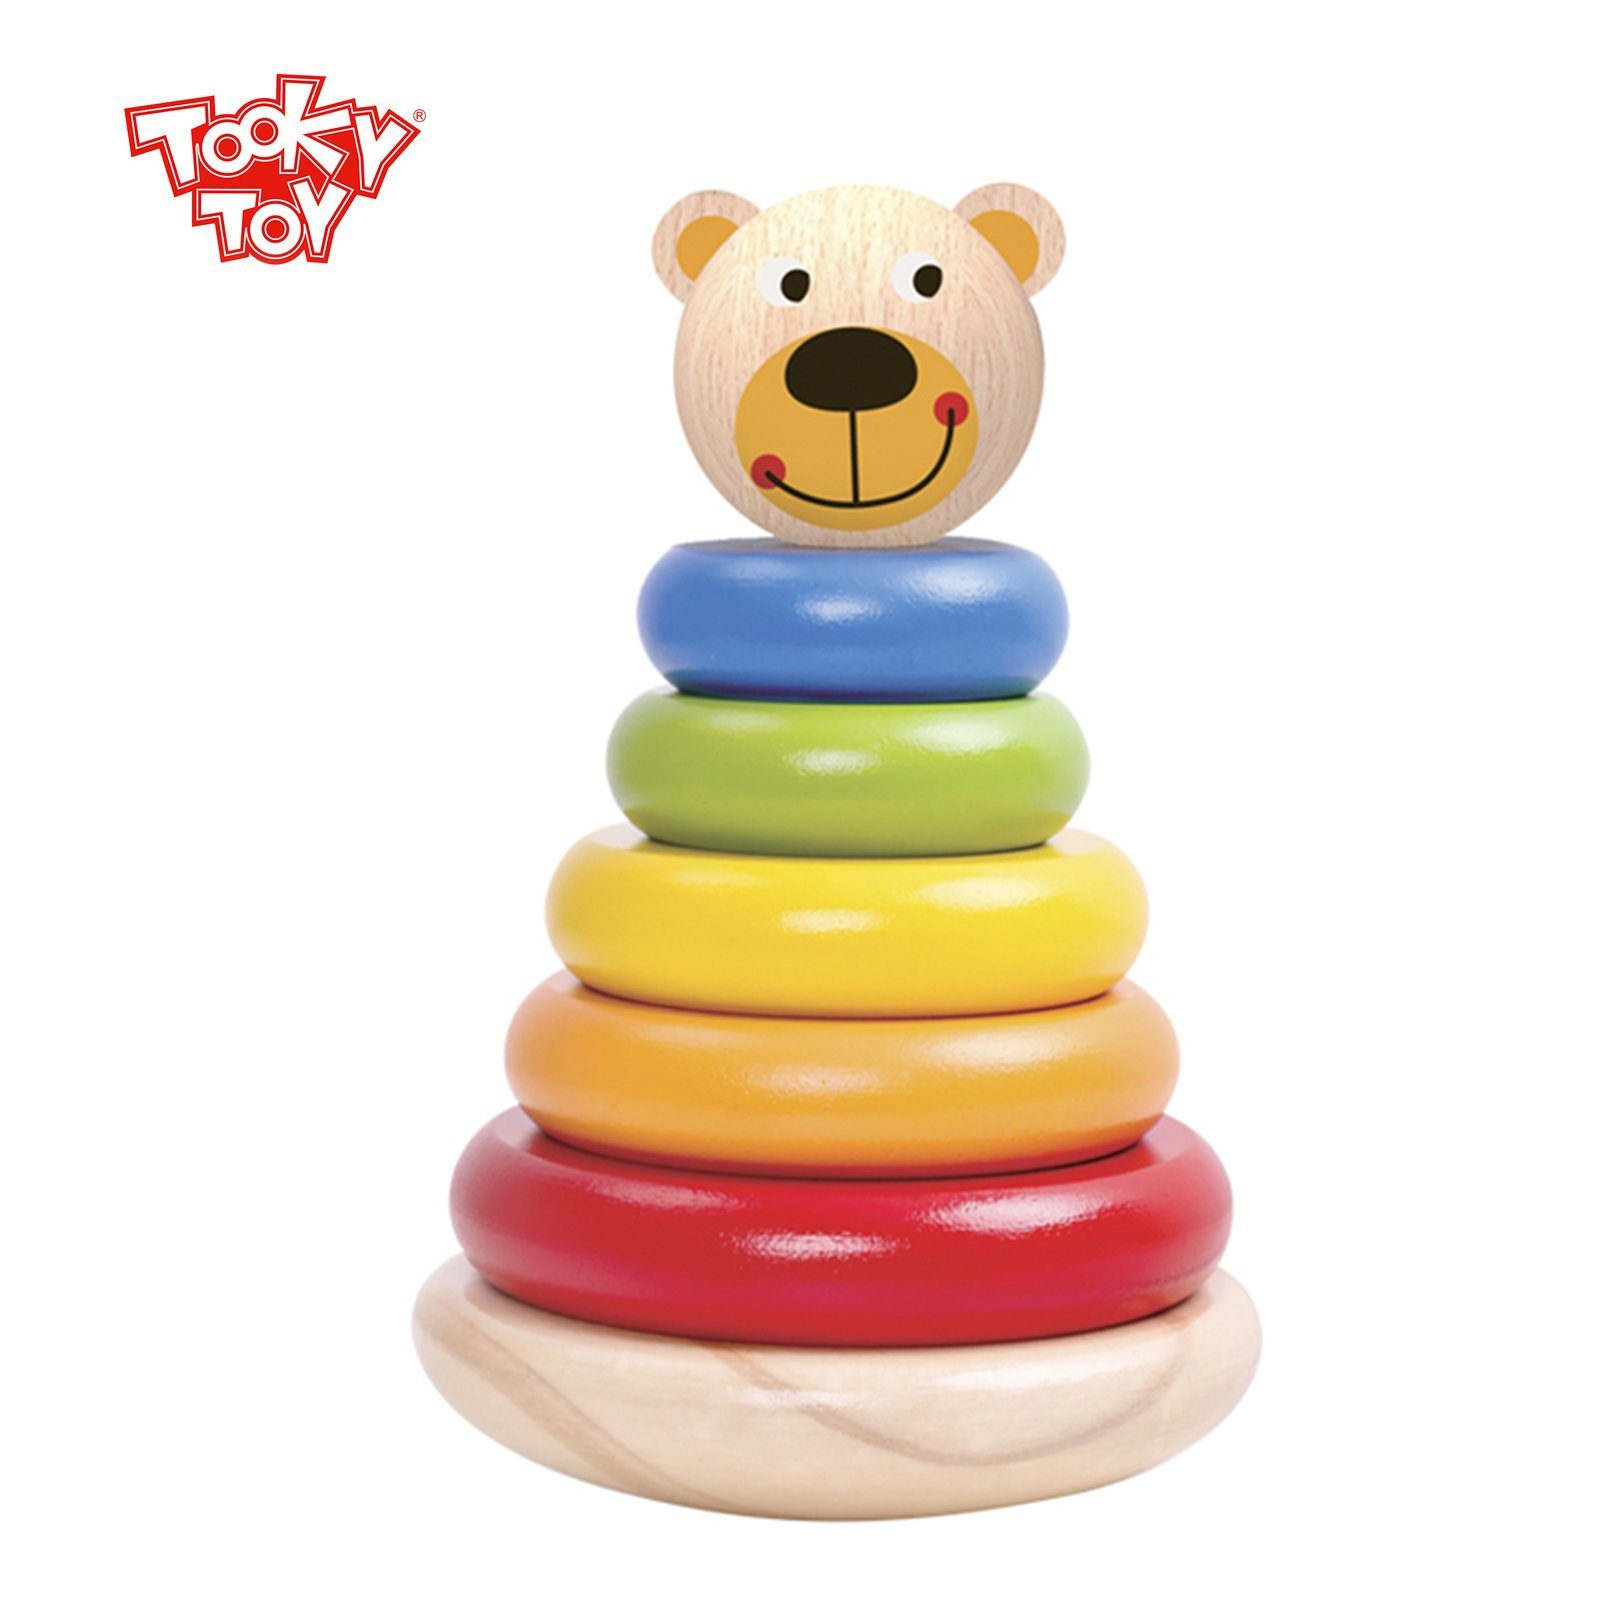 Tooky Toy Lernspielzeug Bär Wackelturm (Set, Regenbogen-Stapelbausteine), Stapelspielzeug Holzspielzeug Balancierspiel aus Holz